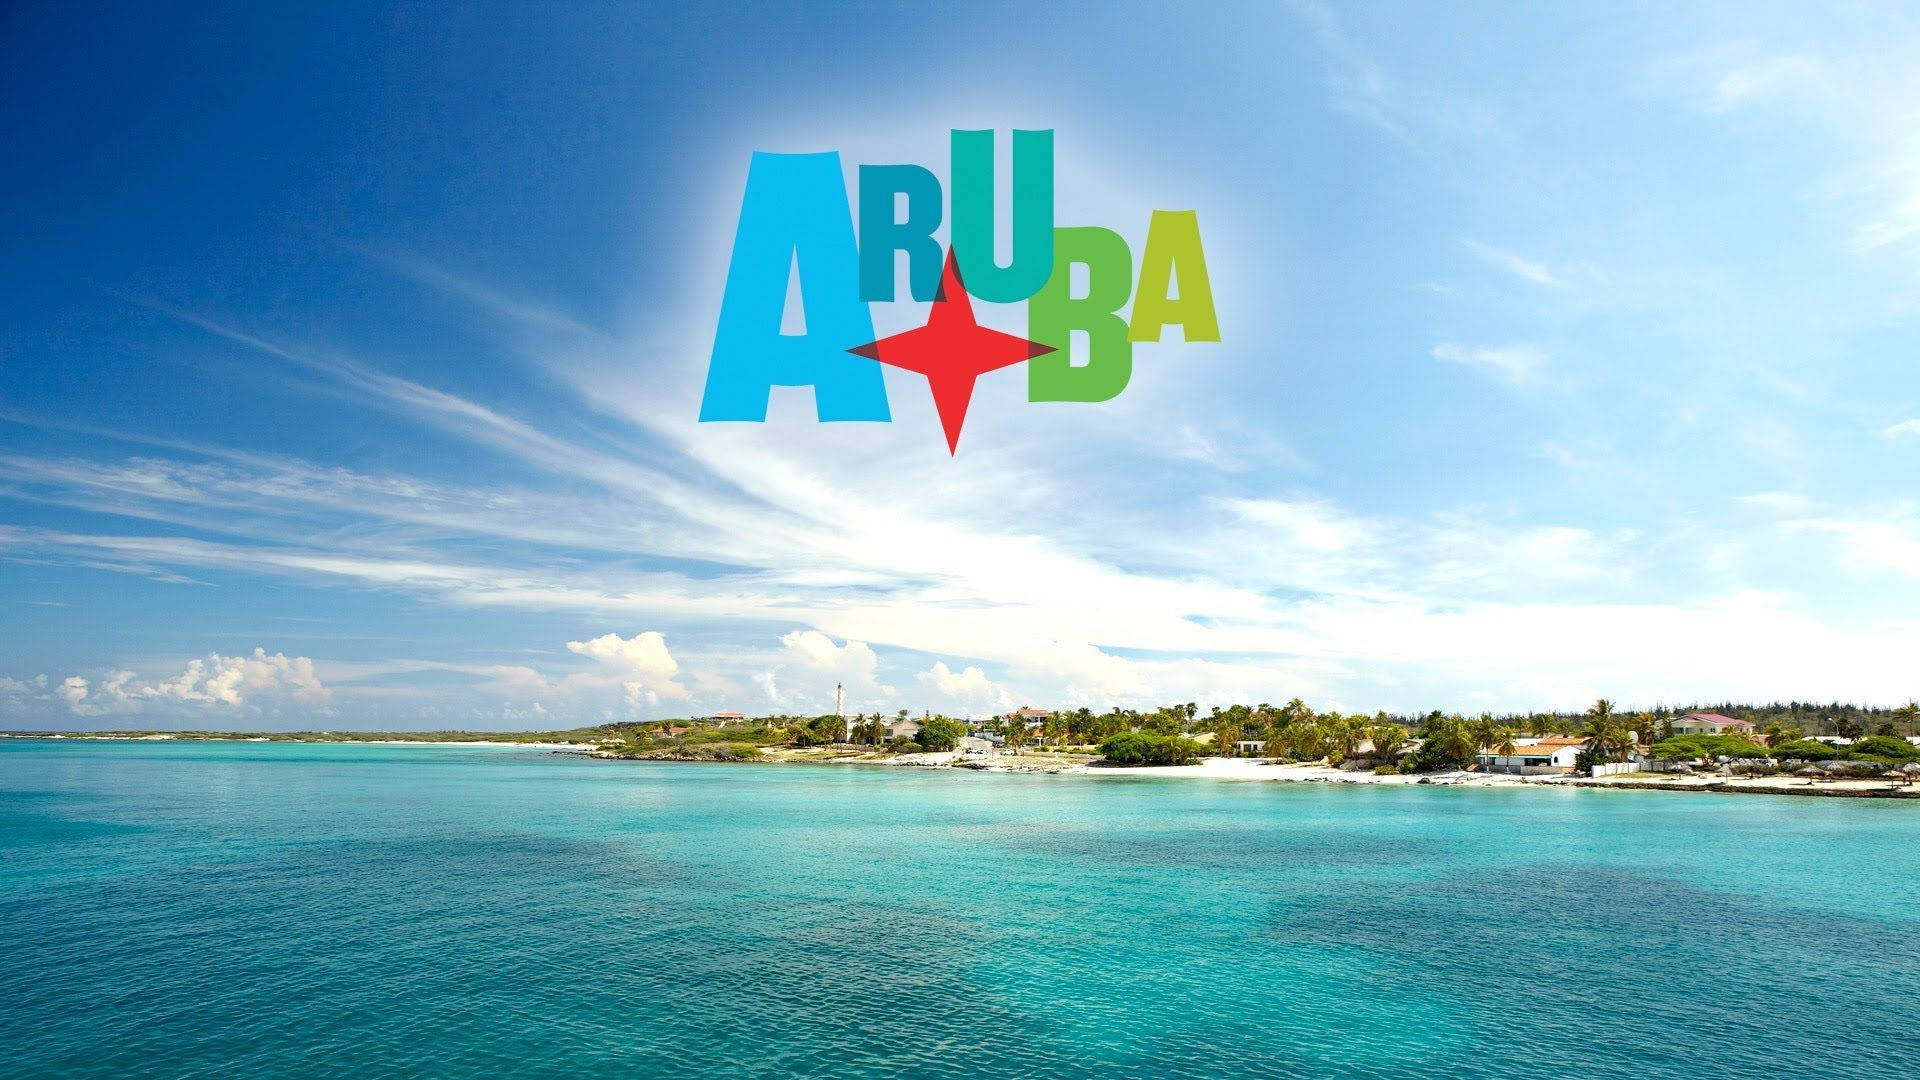 Aruba Beach Poster Background